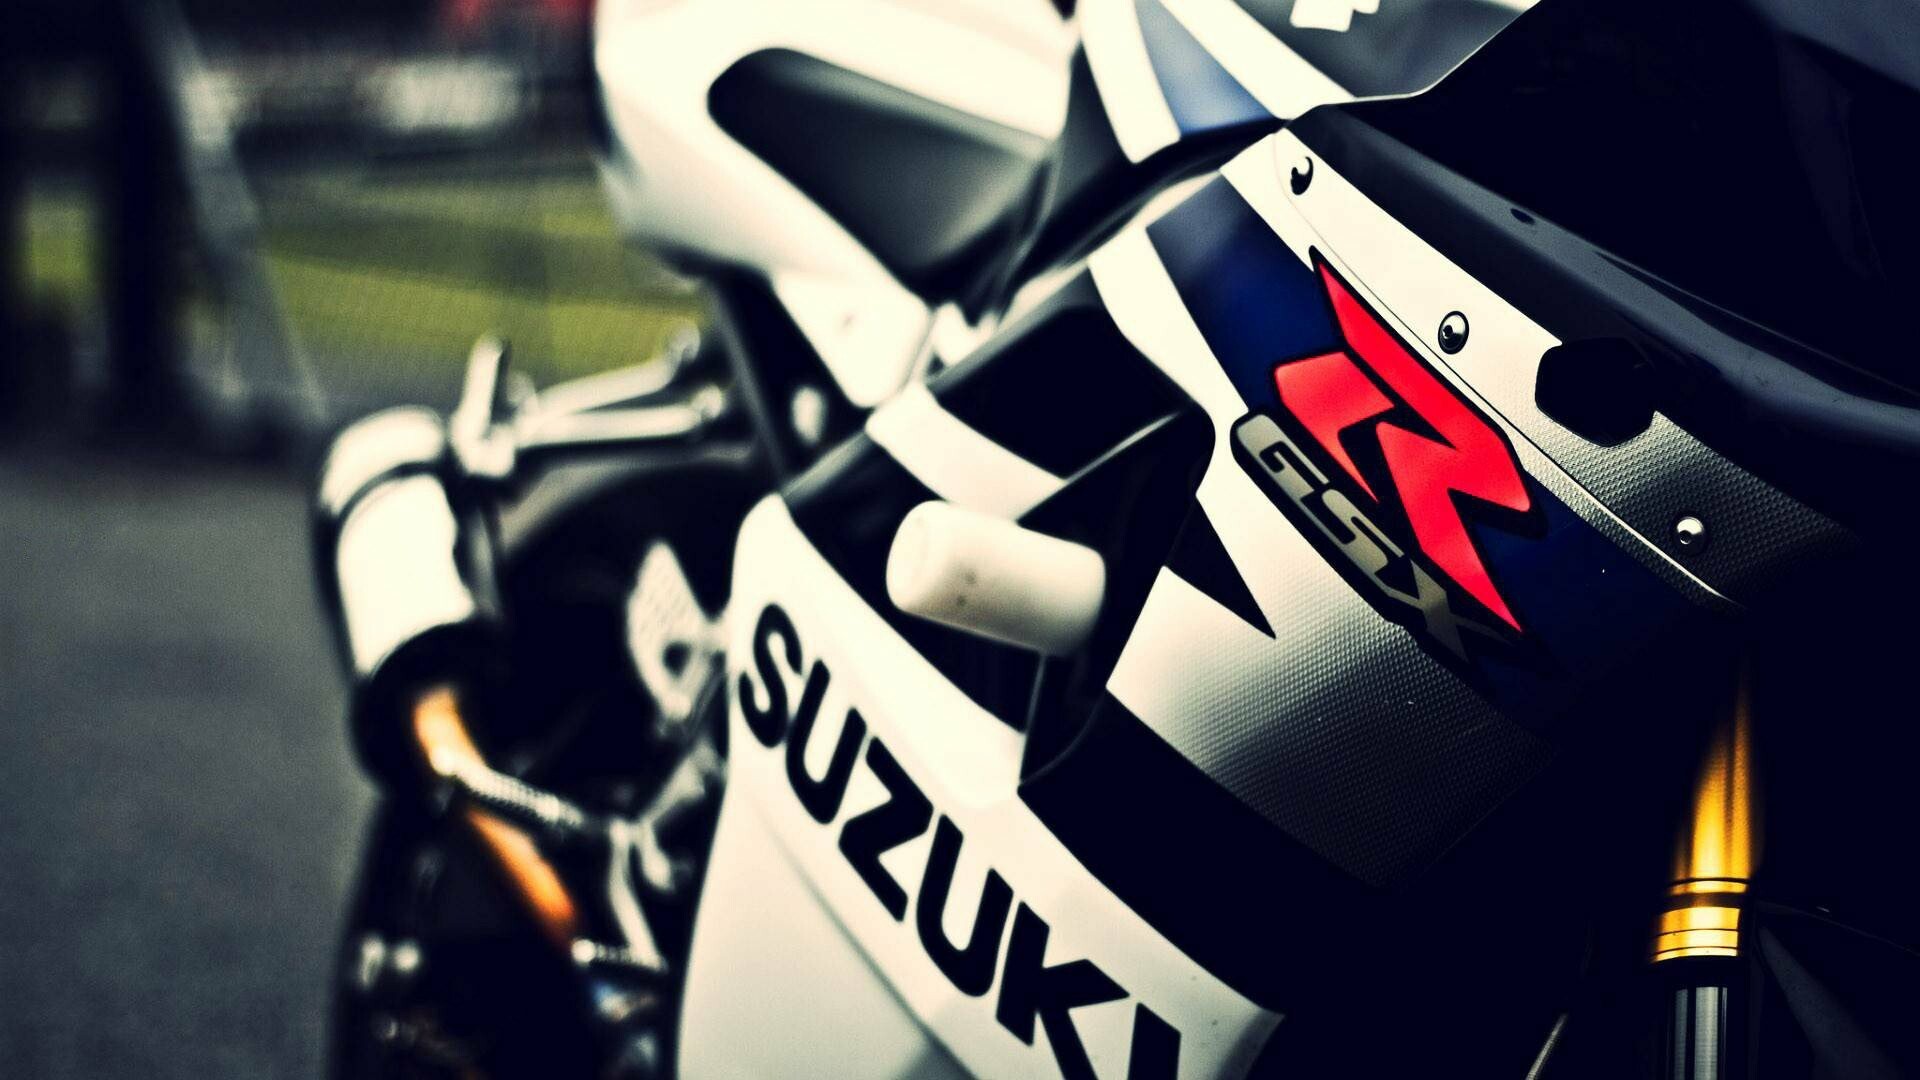 Suzuki bike wallpapers, Desktop and mobile backgrounds, Adventure-ready, Thrilling rides, 1920x1080 Full HD Desktop